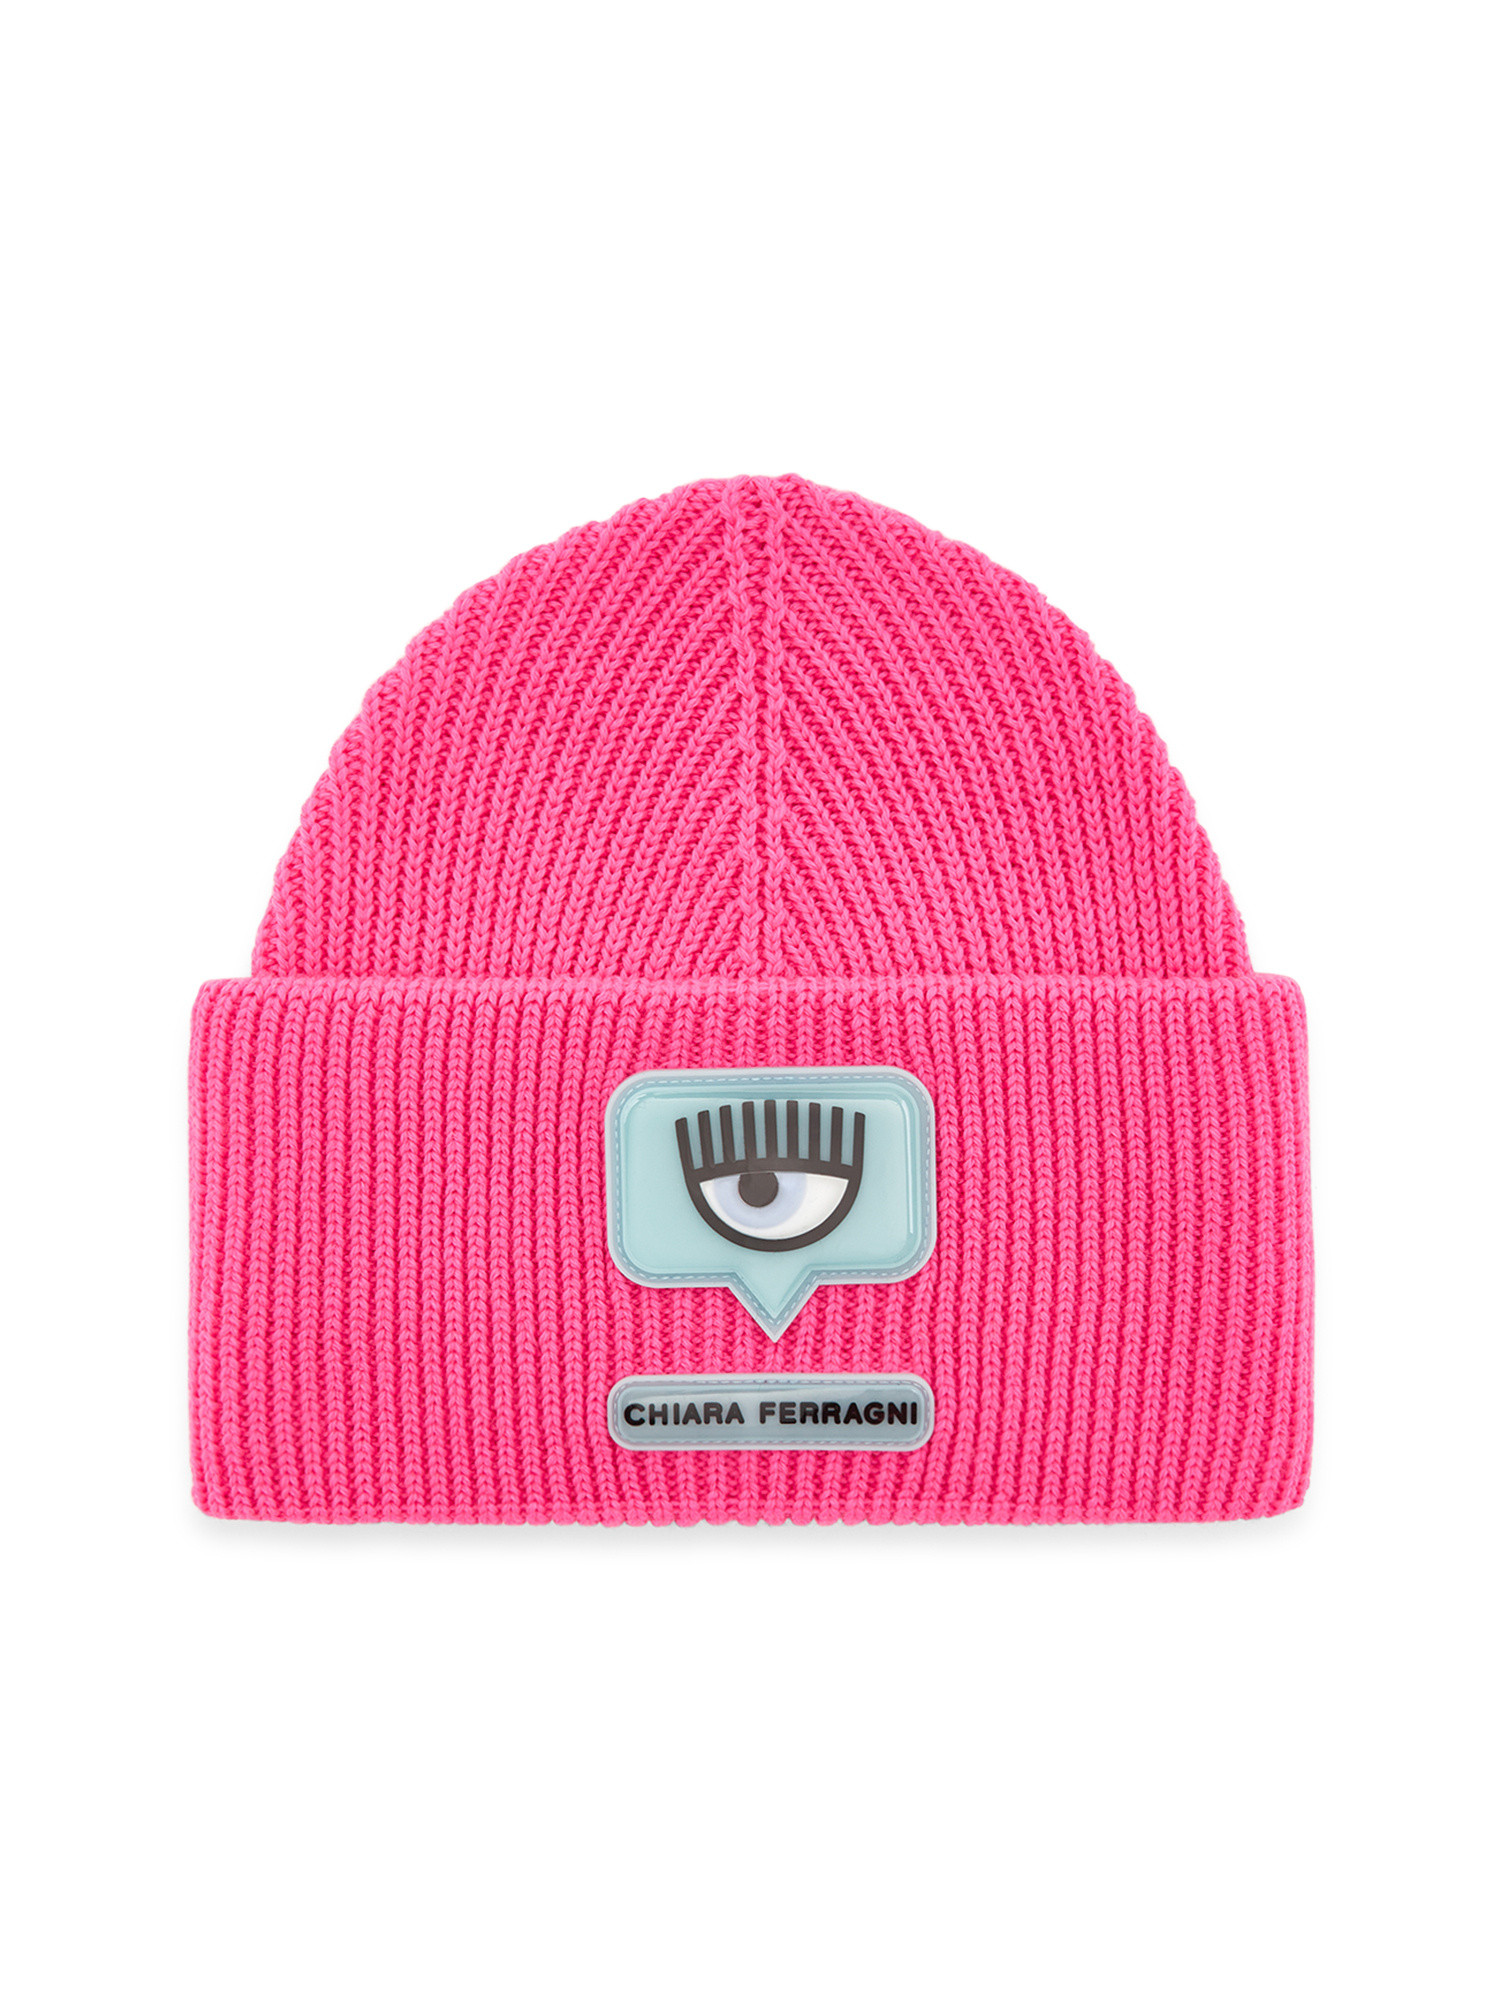 Chiara Ferragni шапка-бини с логотипом Eyelike, ярко-розовый